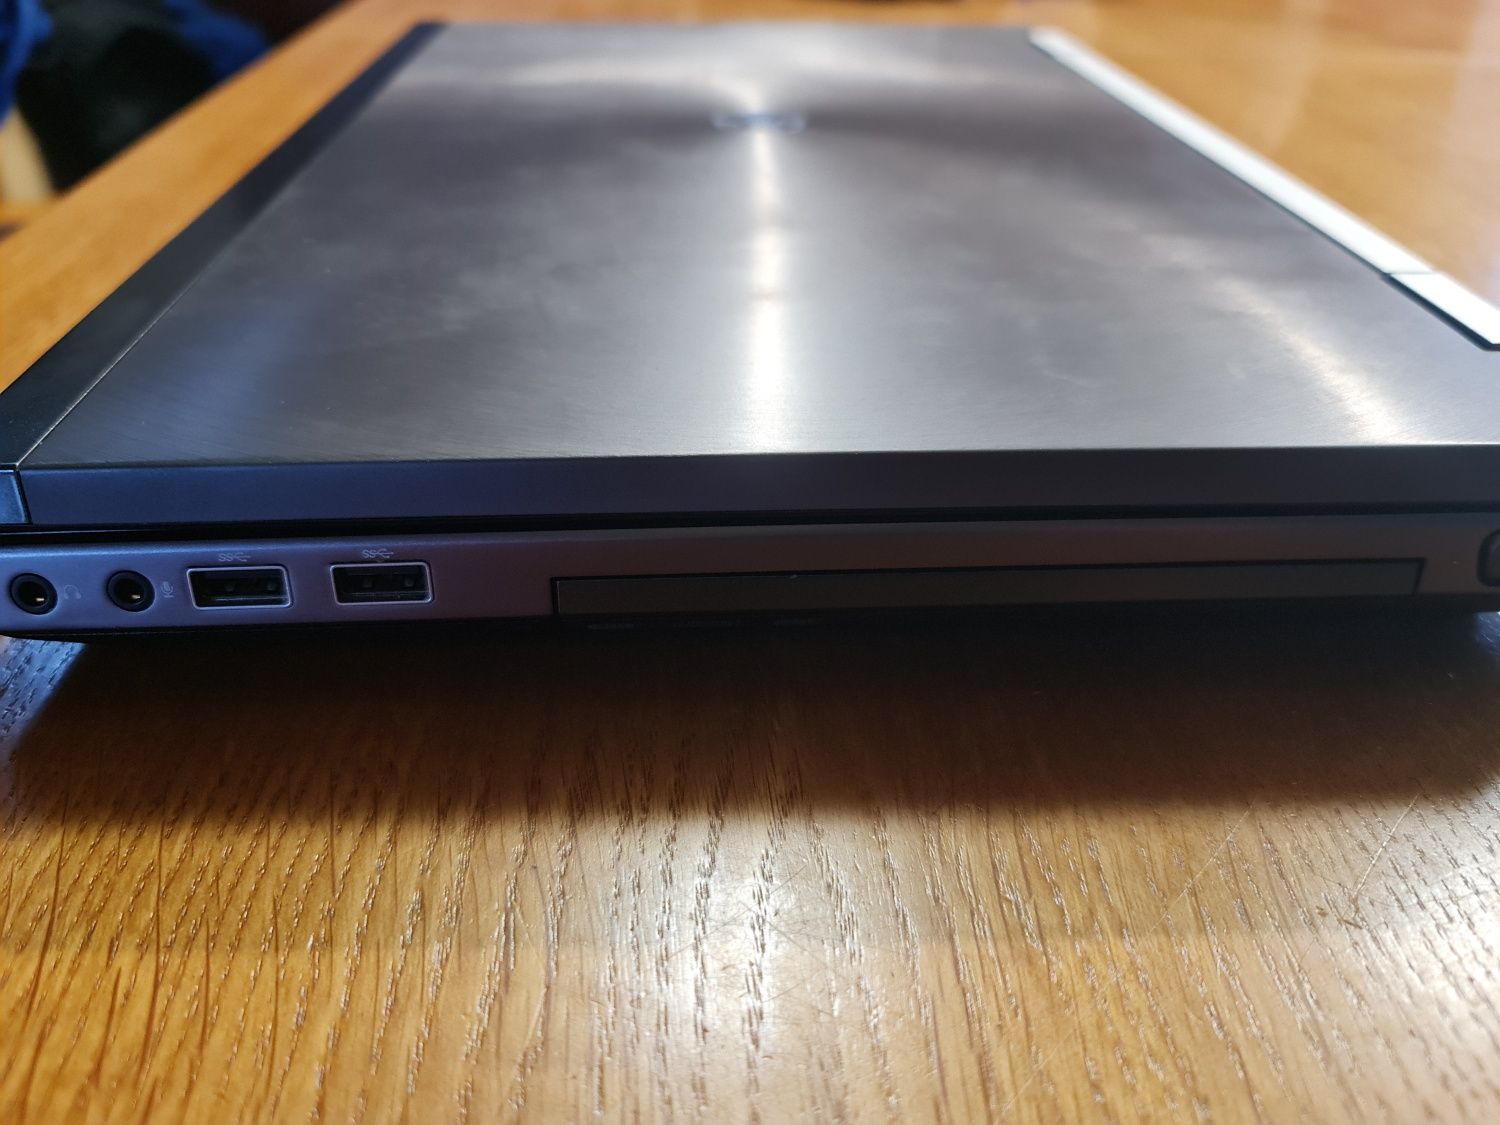 Laptop HP EliteBook 8570w